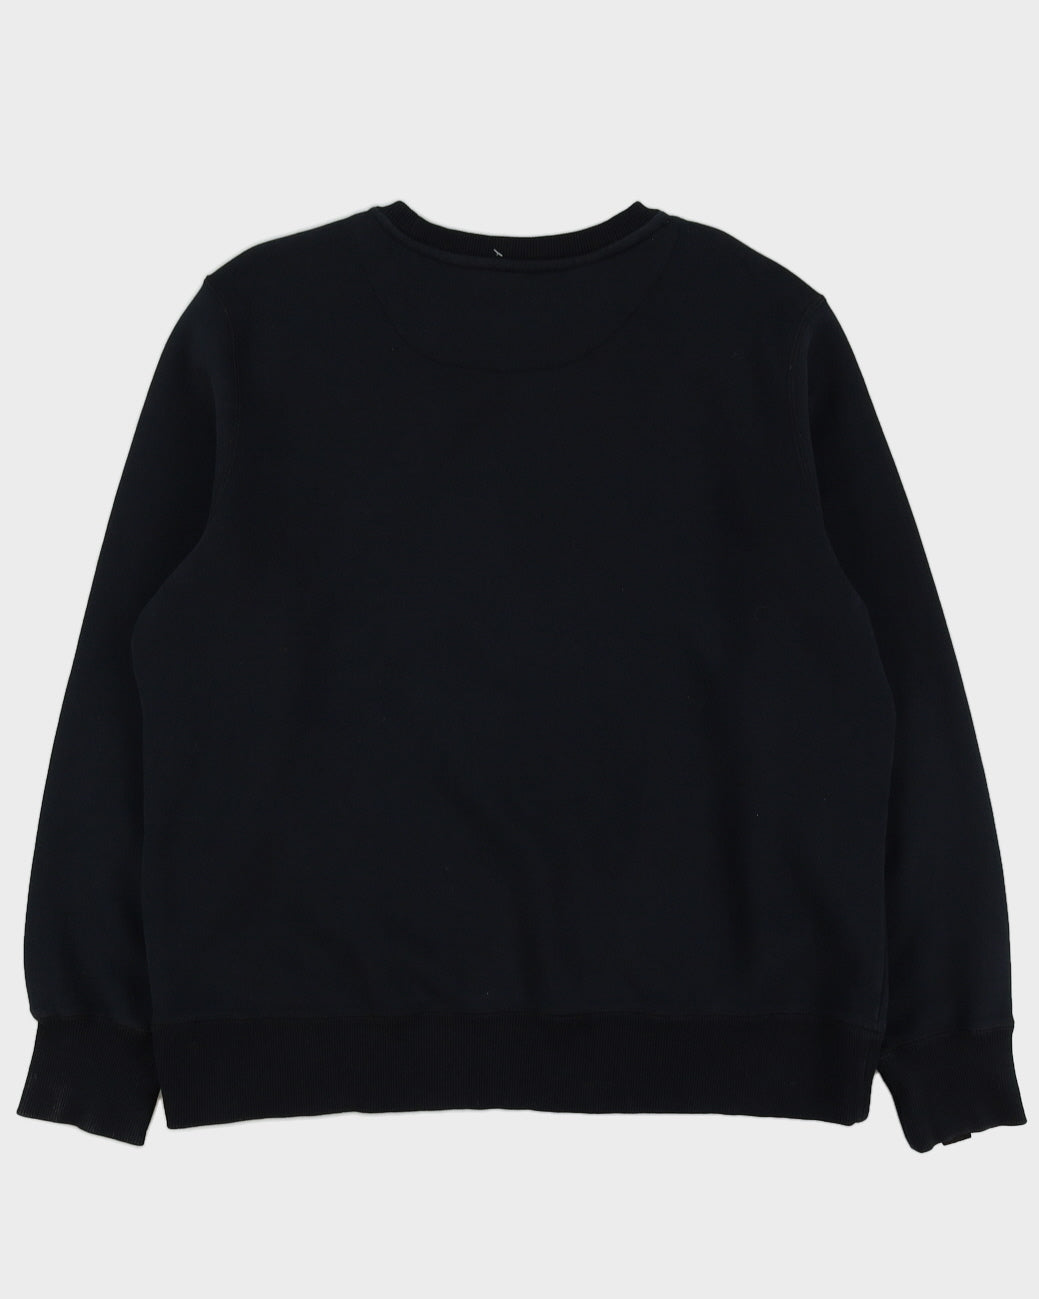 00s Nike Black Spell Out Sweatshirt - XL